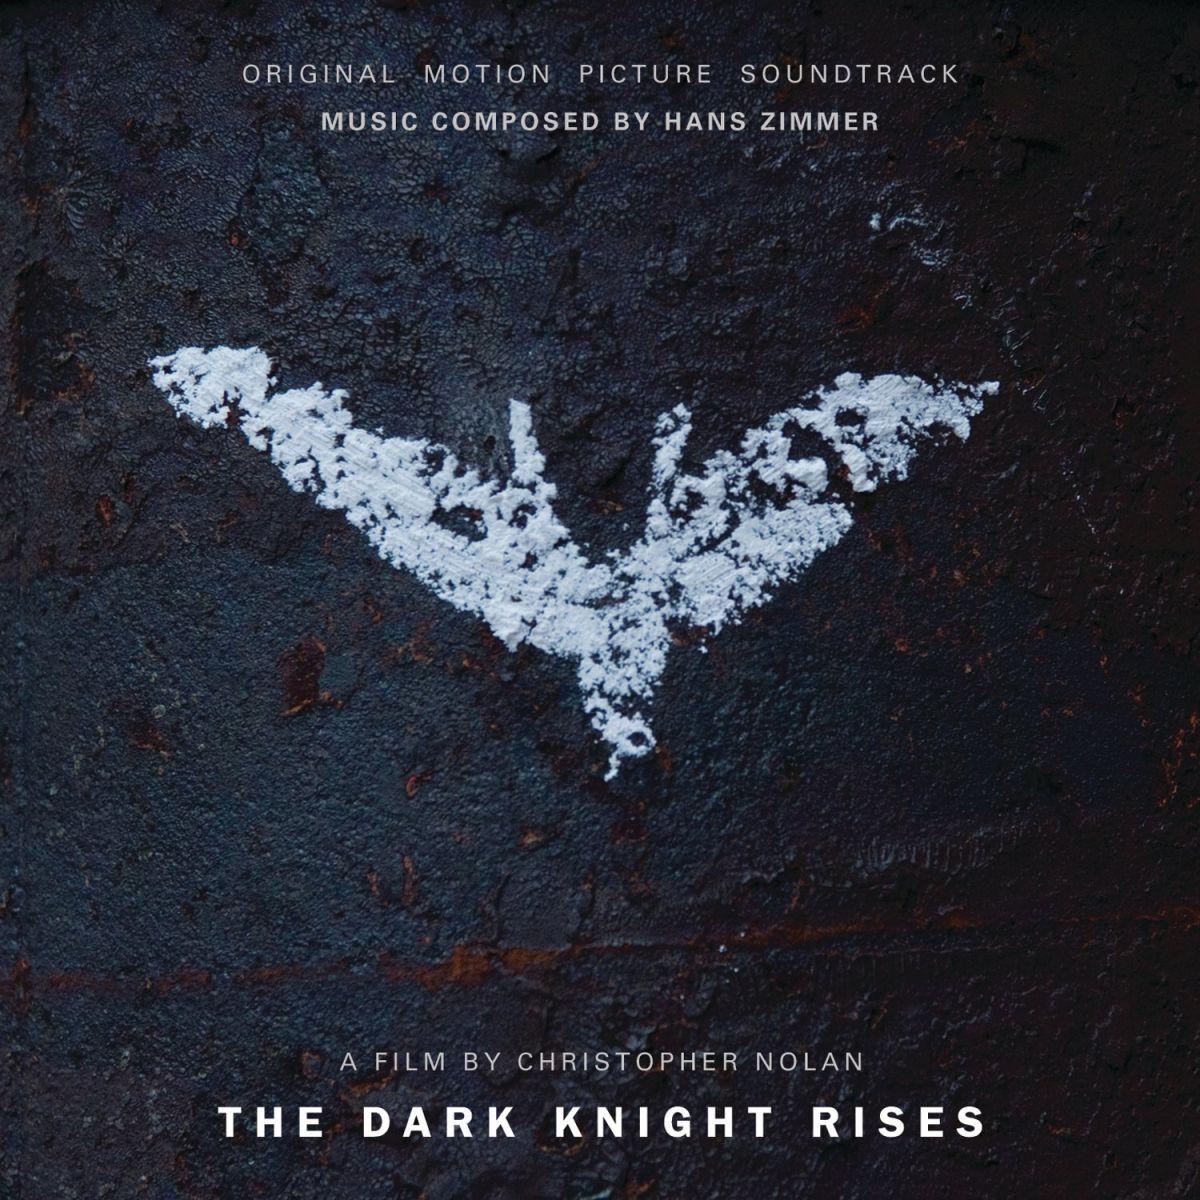 Escucha la banda sonora completa del nuevo Batman